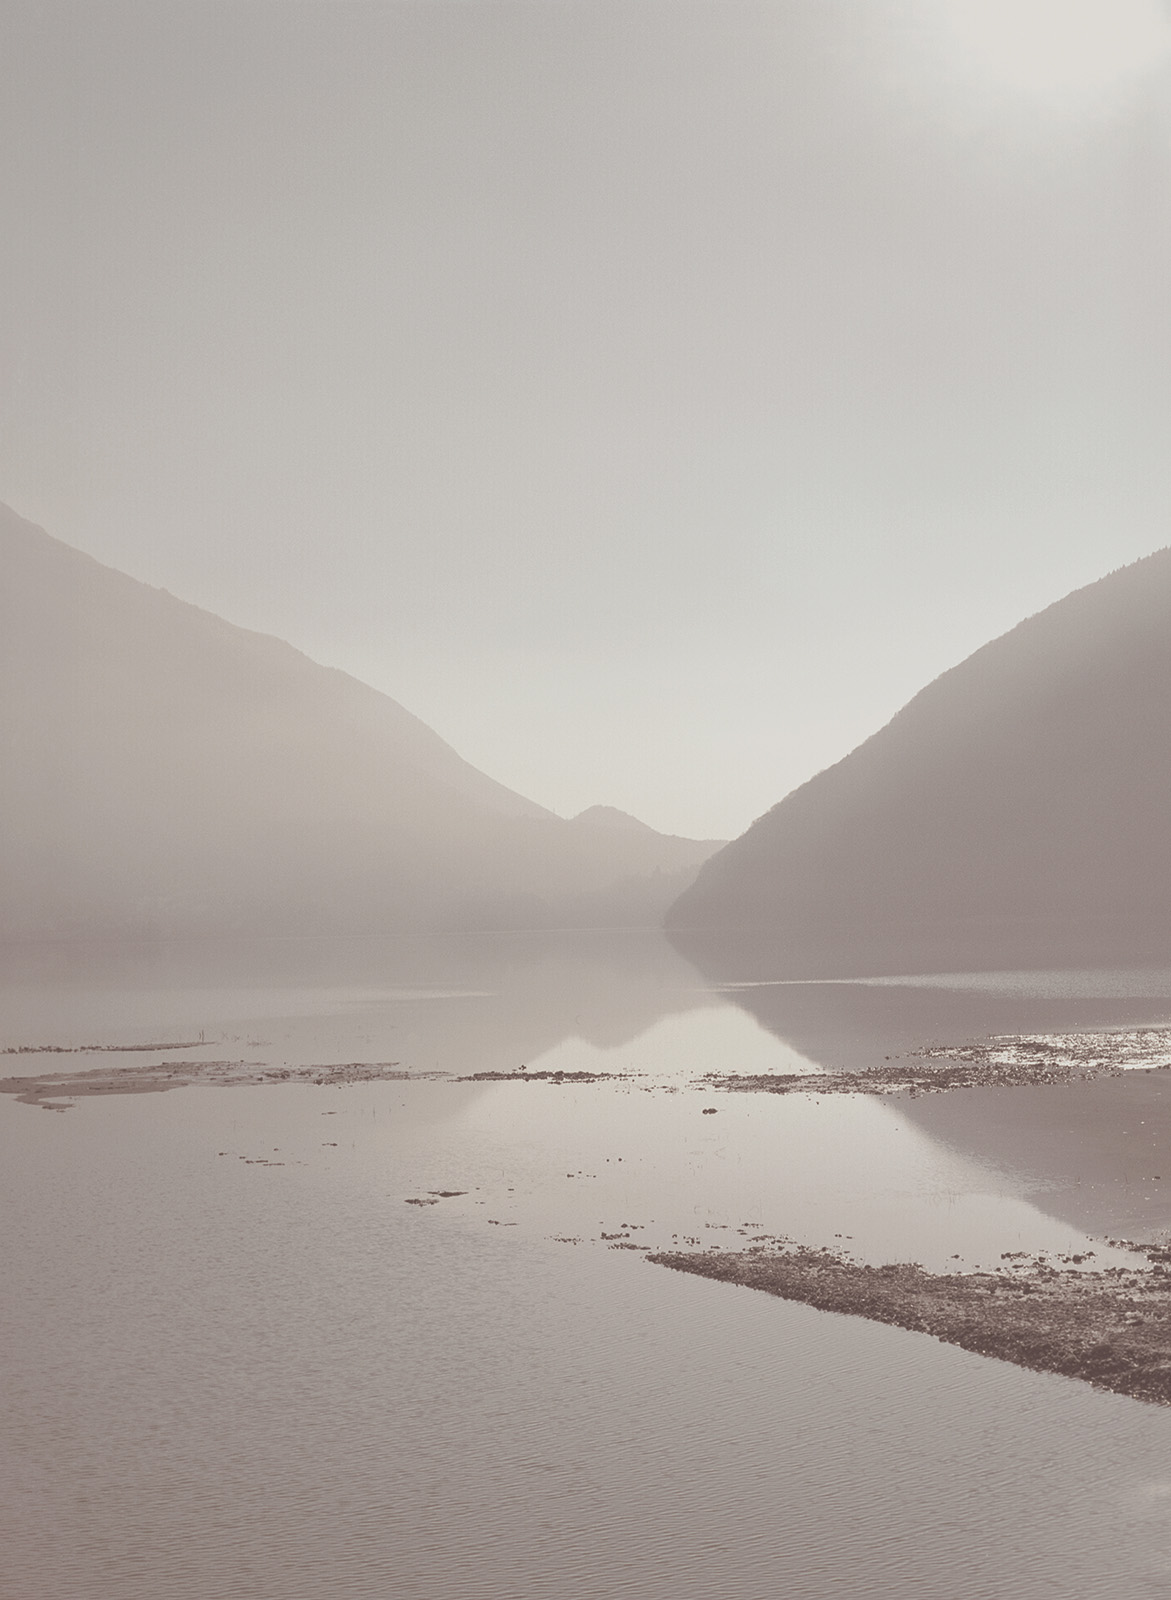 Landscape photography shot in Italy by Namiko Kitaura